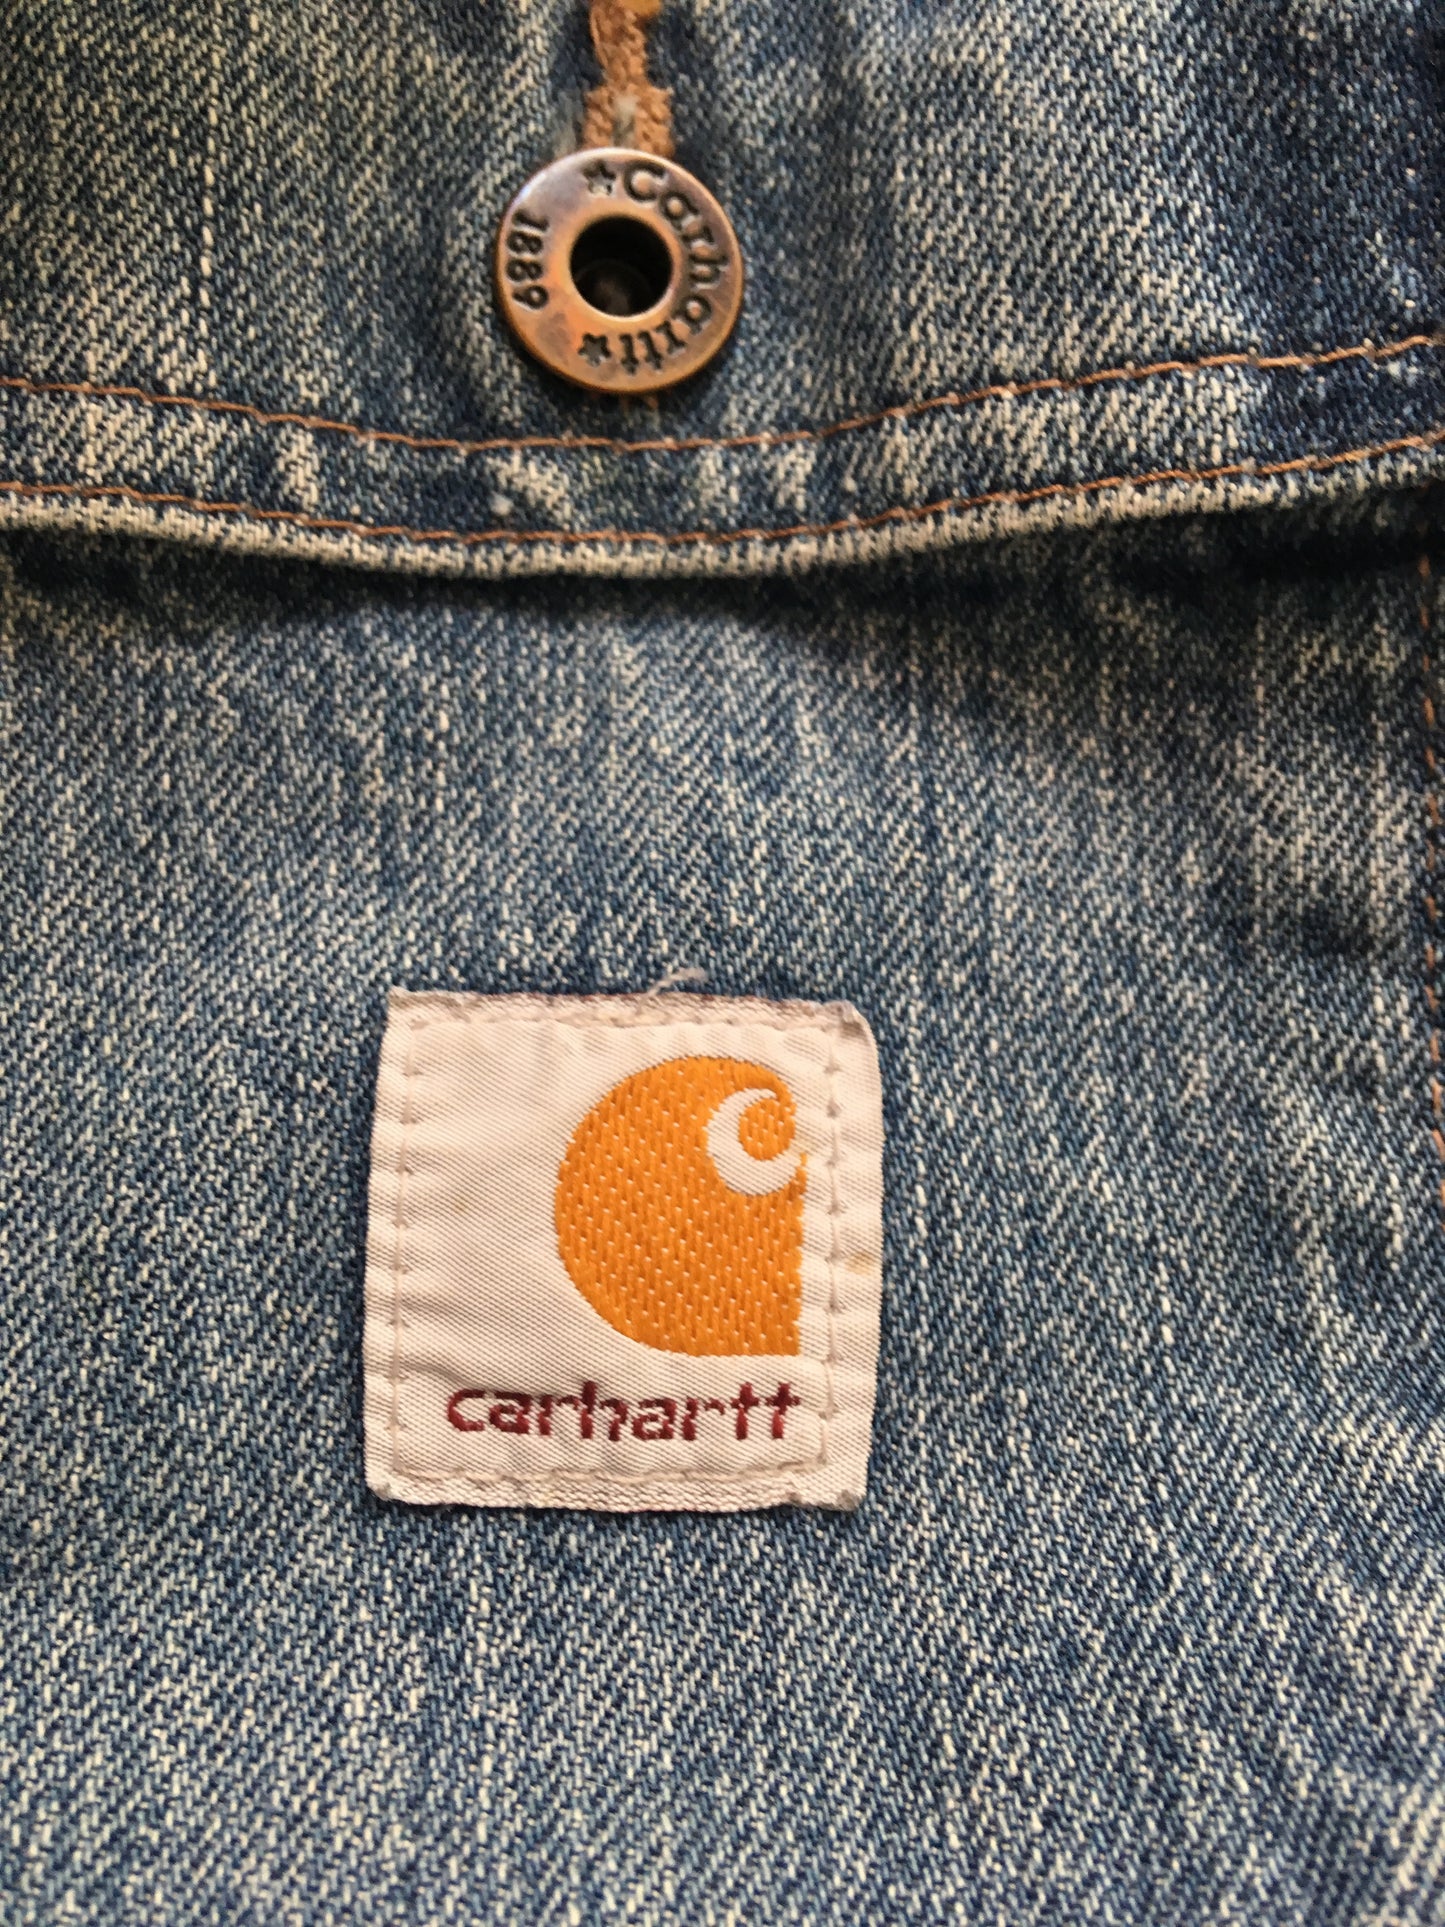 Carhart Denim Jacket